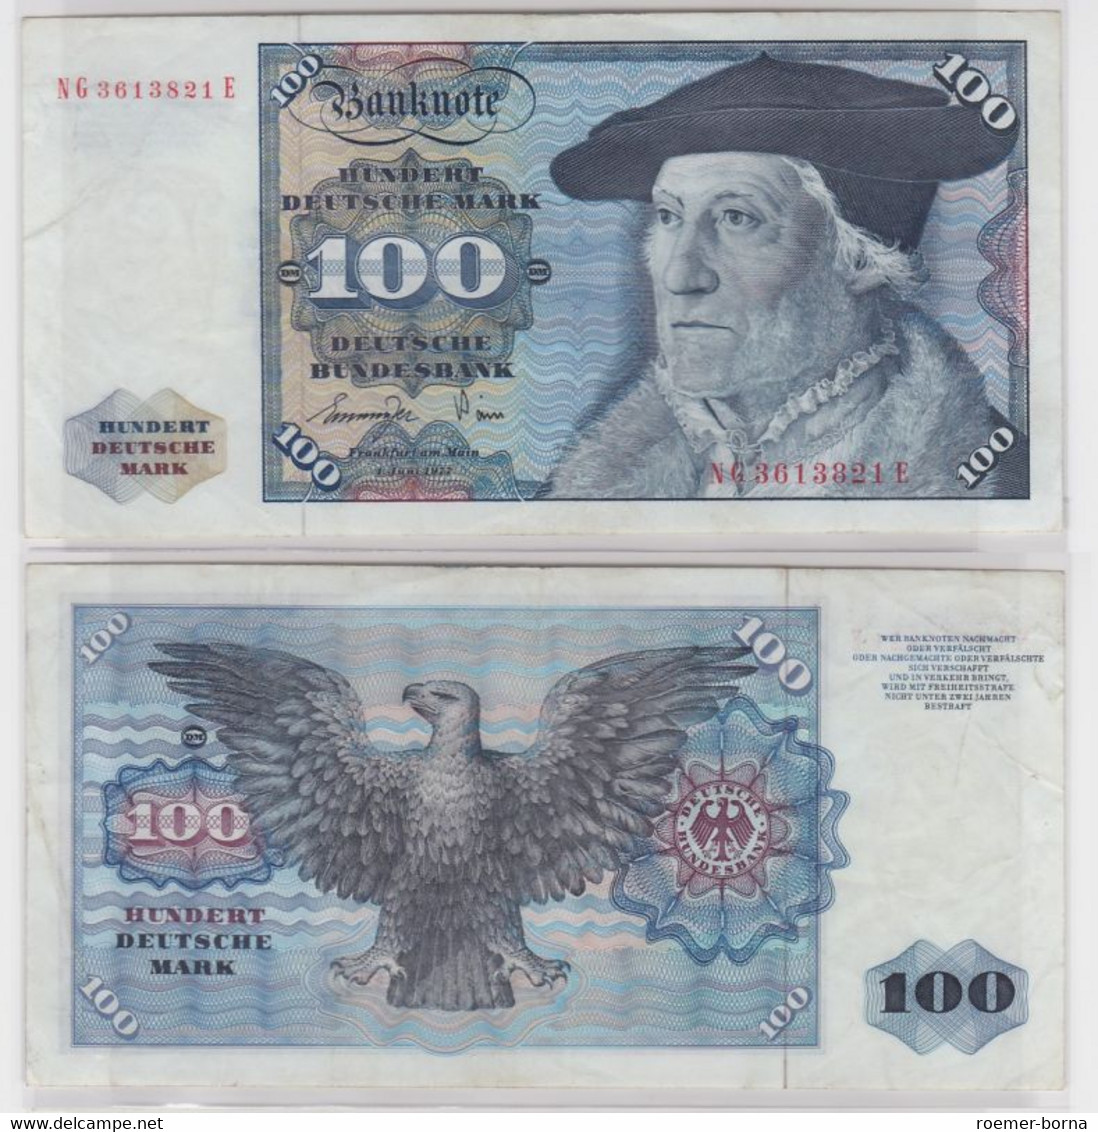 T146519 Banknote 100 DM Deutsche Mark Ro 278a Schein 1.Juni 1977 KN NG 3613821 E - 100 DM